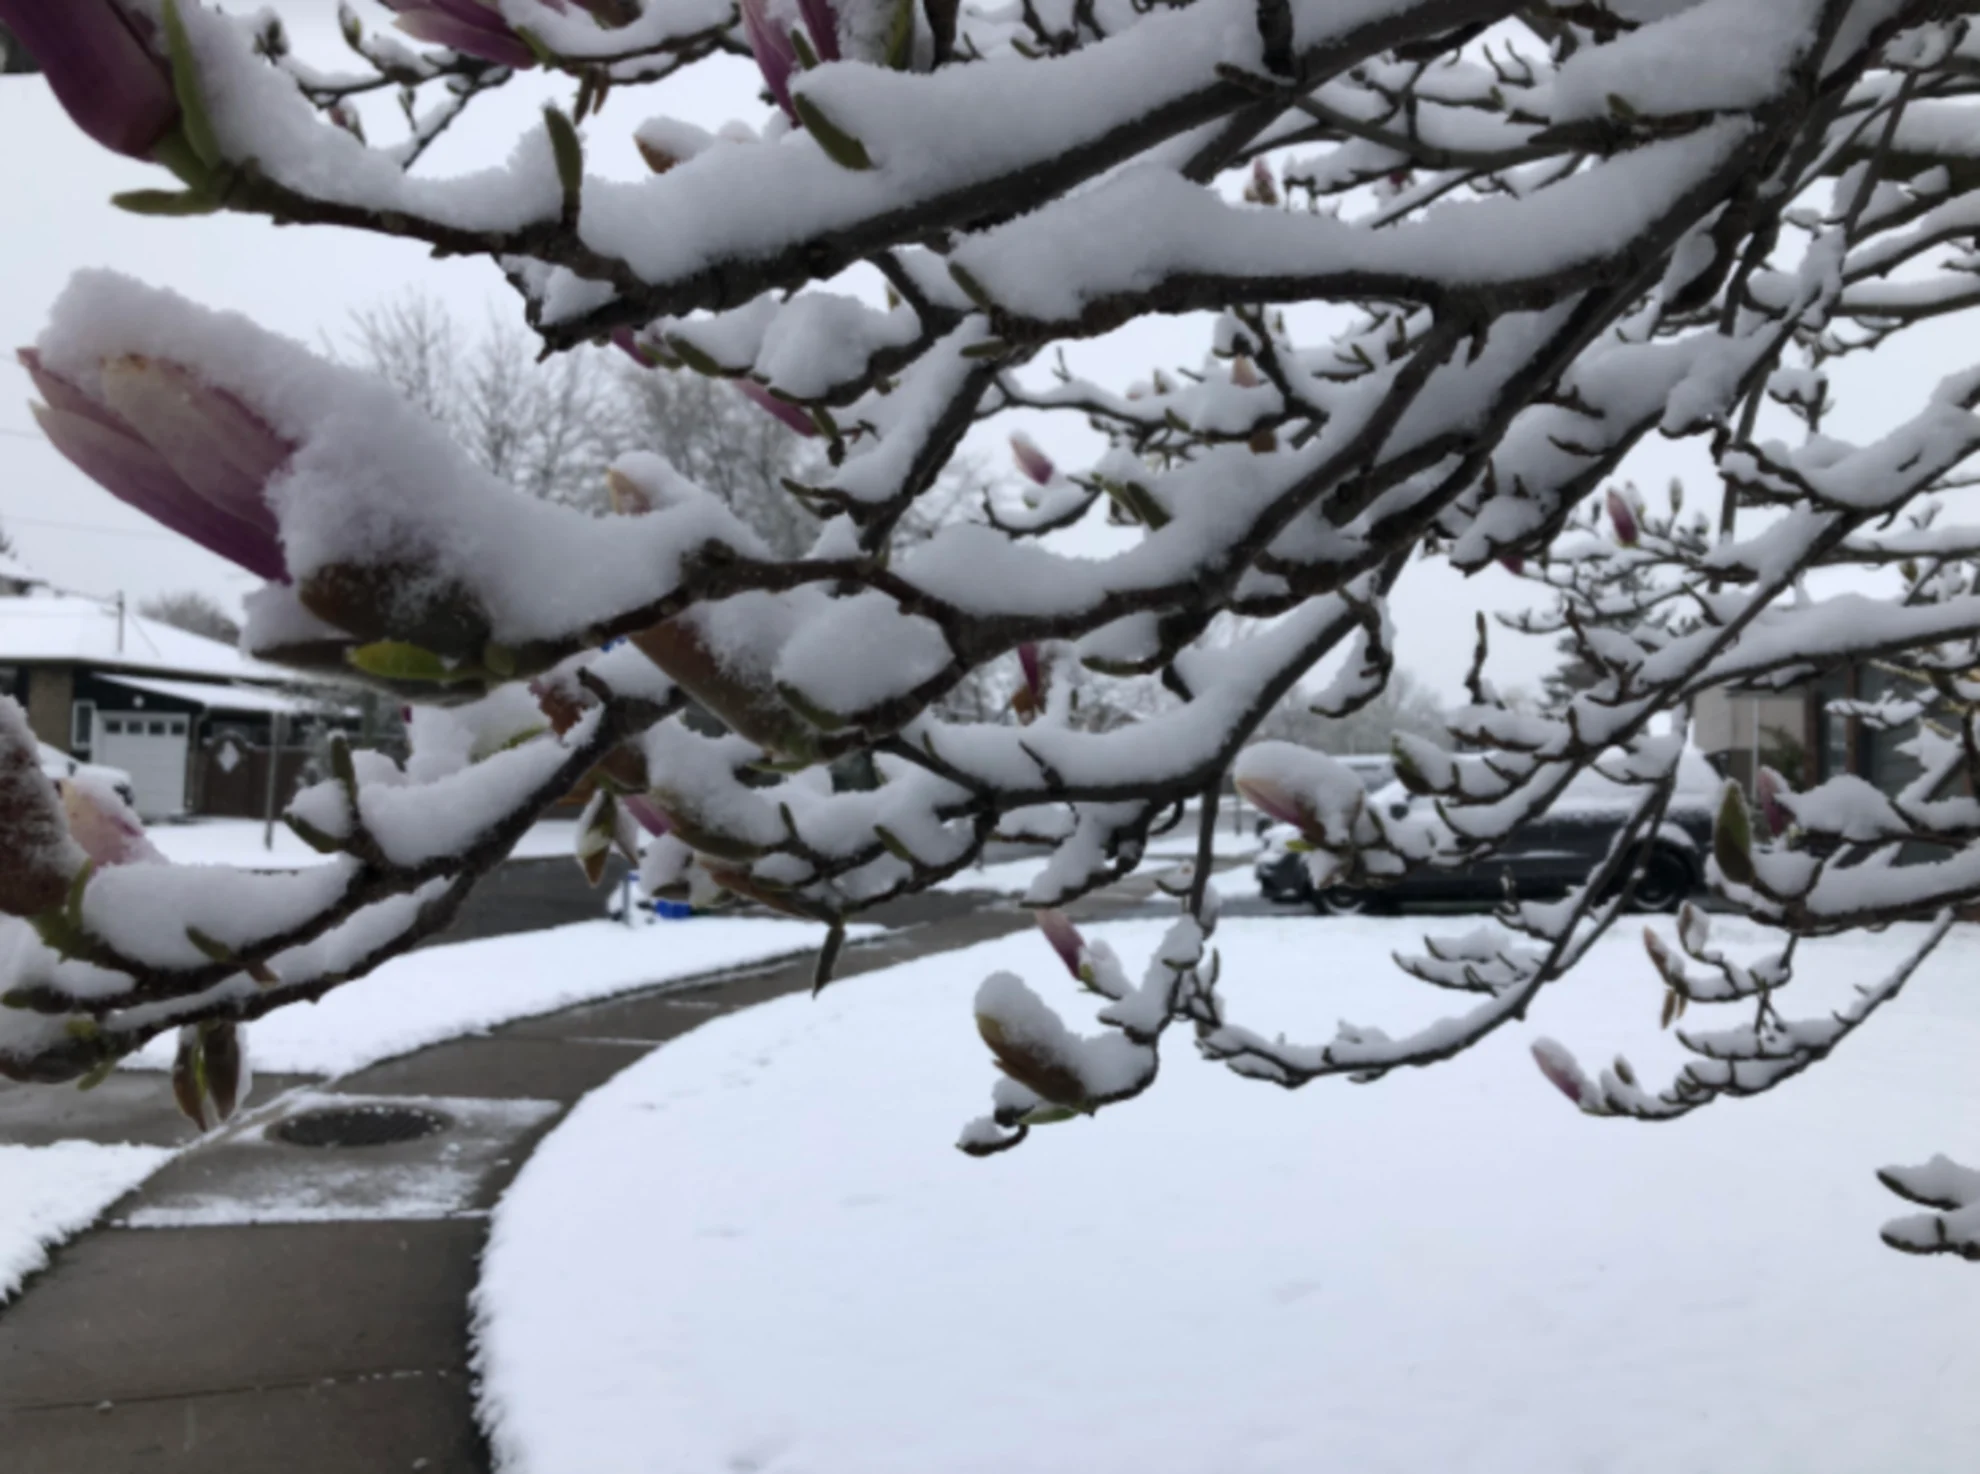 Spring's snowfall showdown continues in Alberta. See what we're watching this week, here